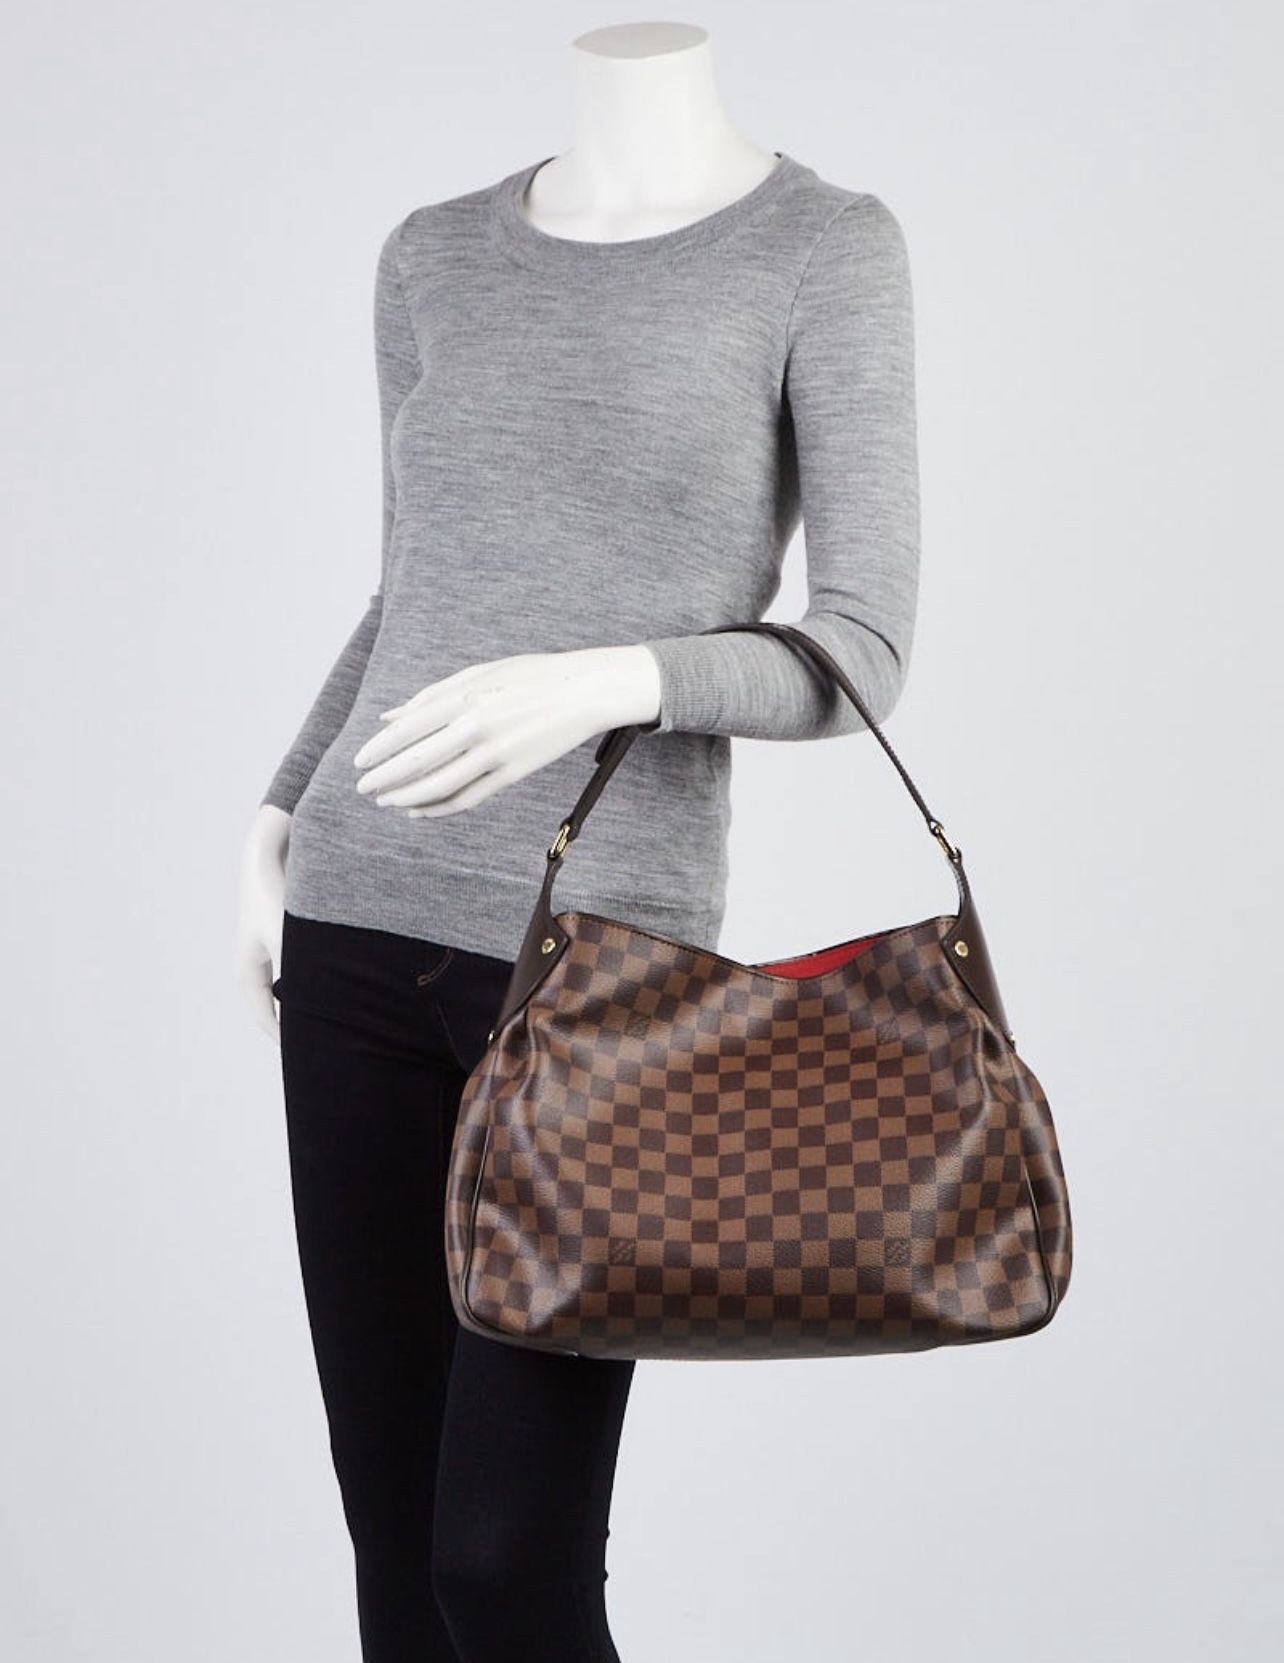 Louis Vuitton Hyde Park Bag for Sale in Boerne, TX - OfferUp